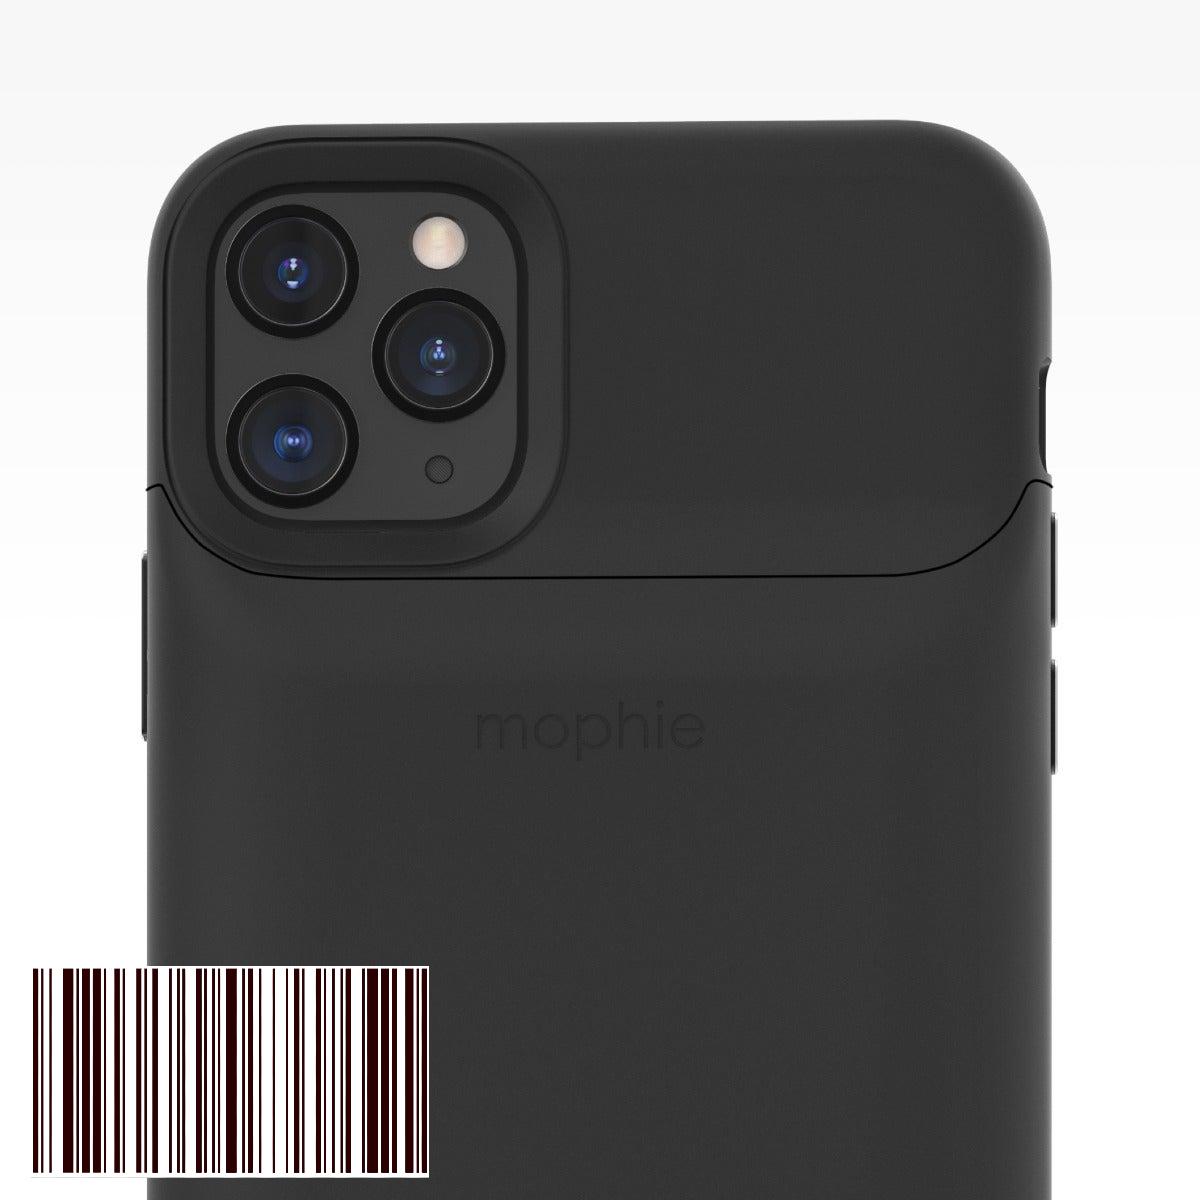 حالات mophie lana مع بطارية لأجهزة iPhone 11 و 11 Pro و 11 Pro Max - MacMagazine.com